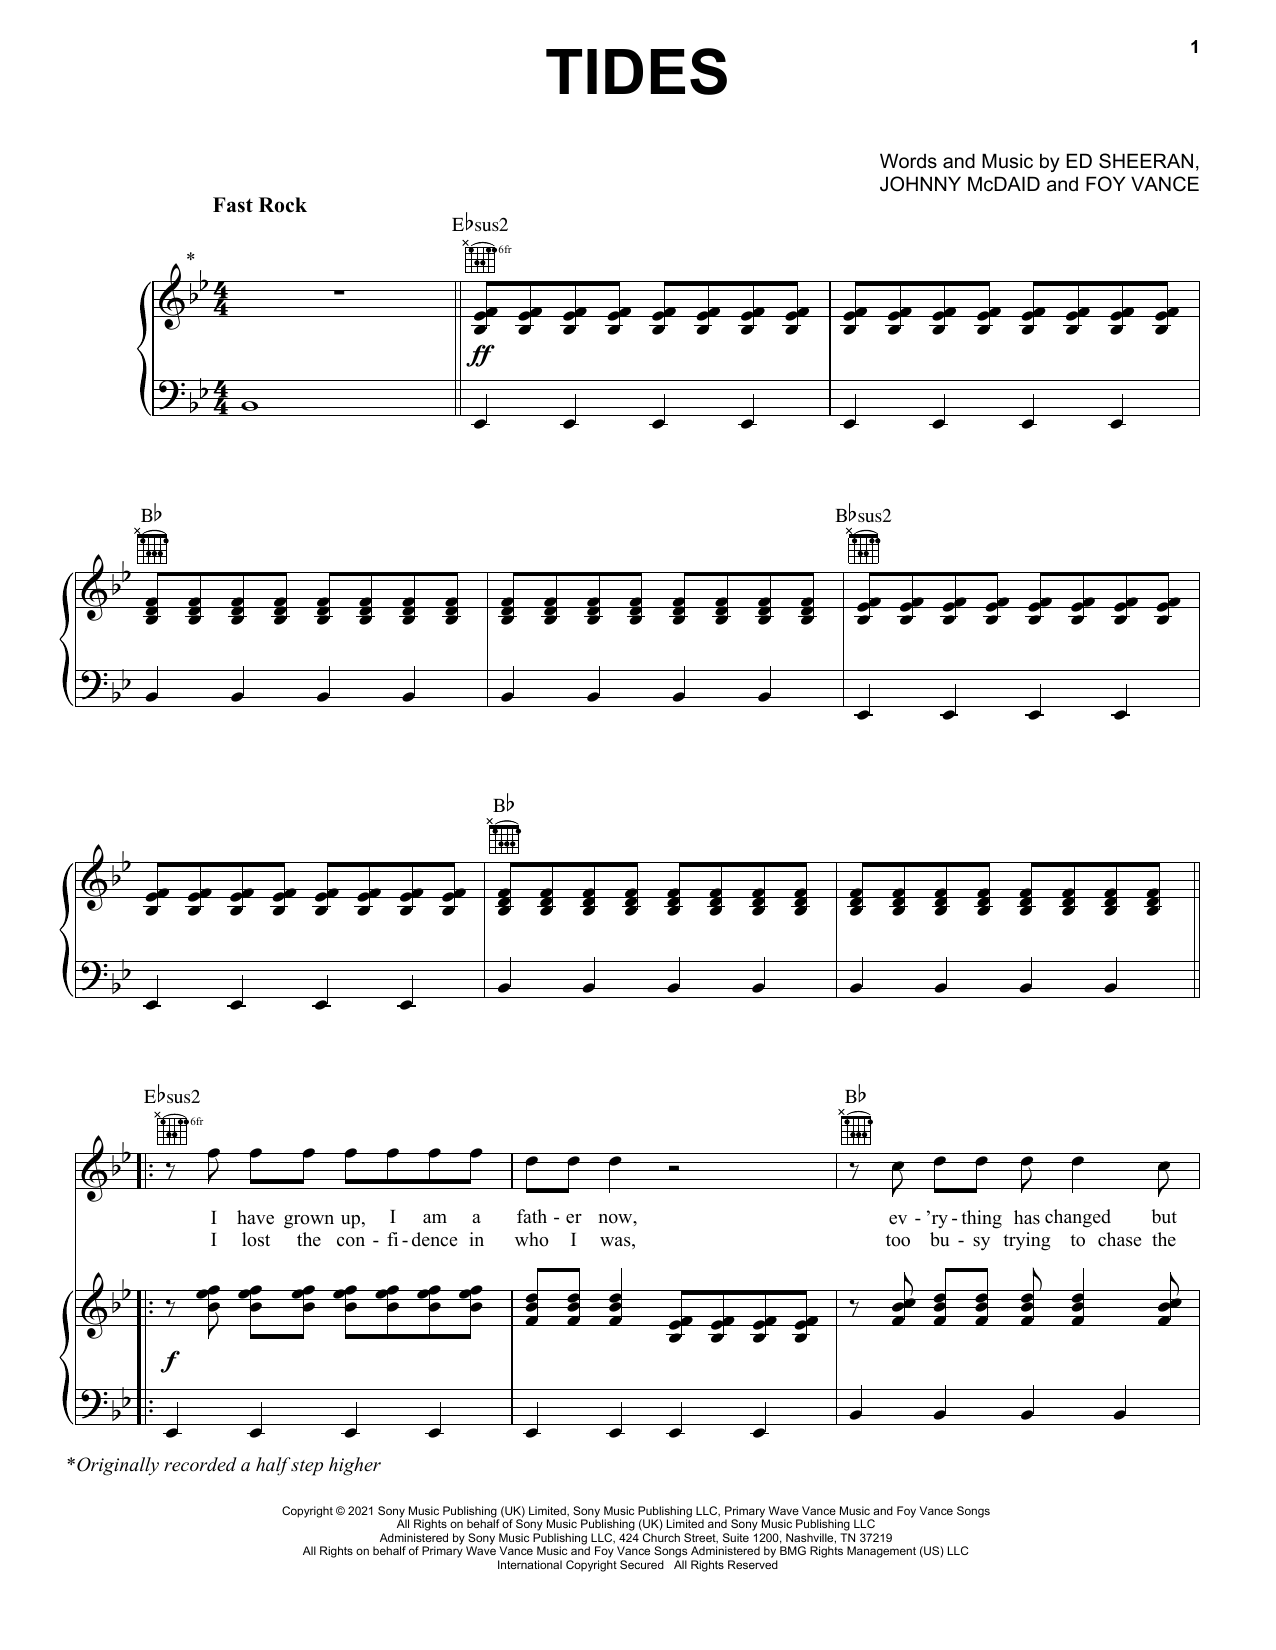 Ed Sheeran Tides Sheet Music Notes & Chords for Piano, Vocal & Guitar (Right-Hand Melody) - Download or Print PDF